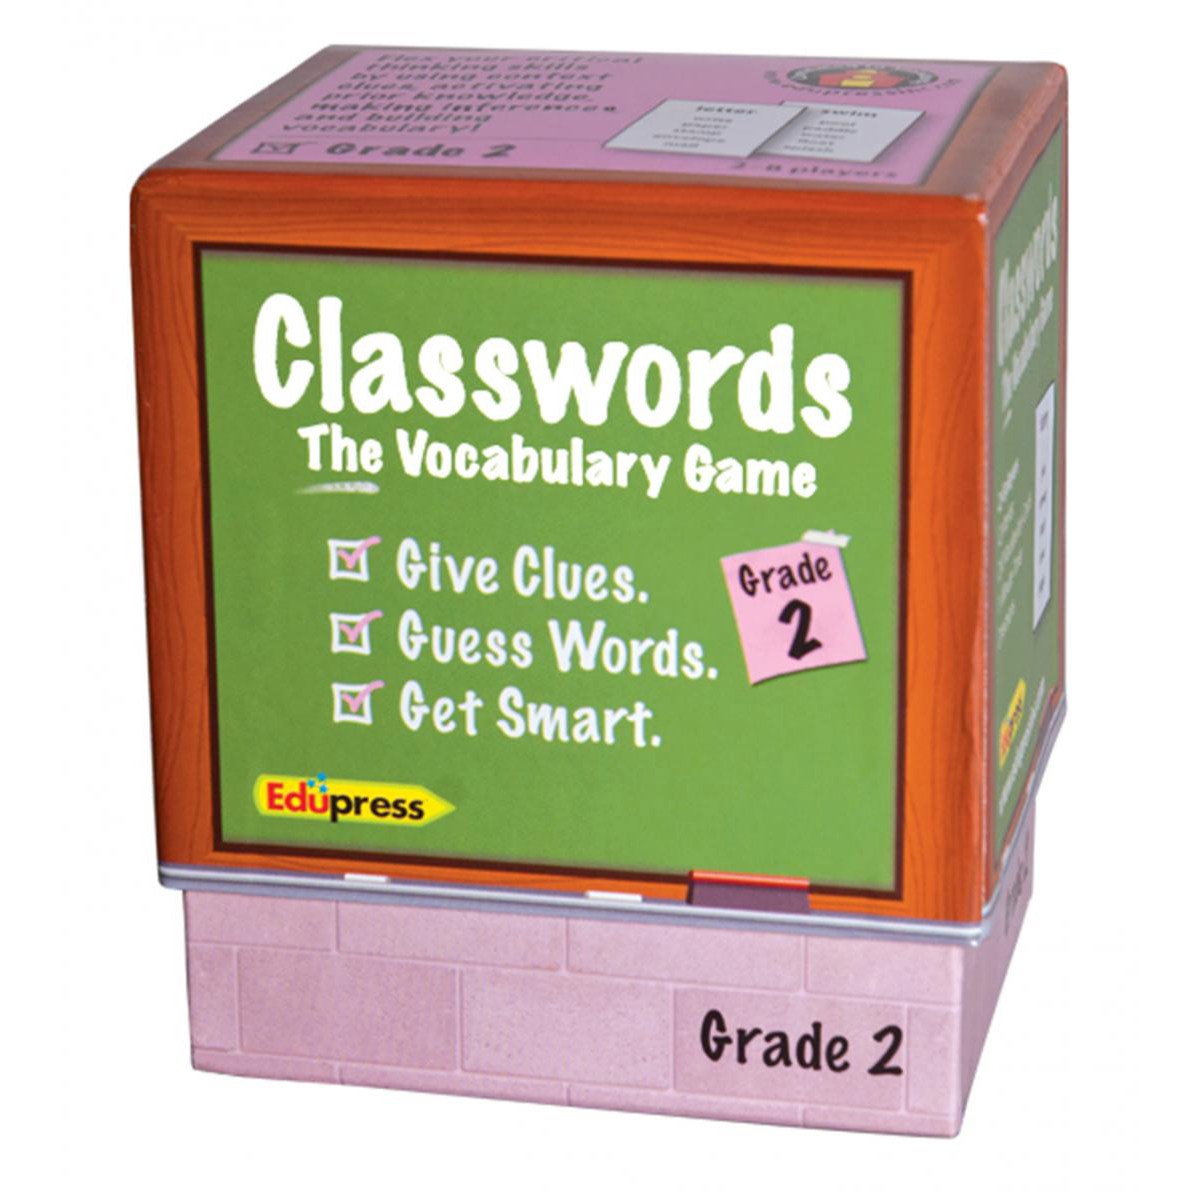  Classwords The Vocabulary Game Gr. 2